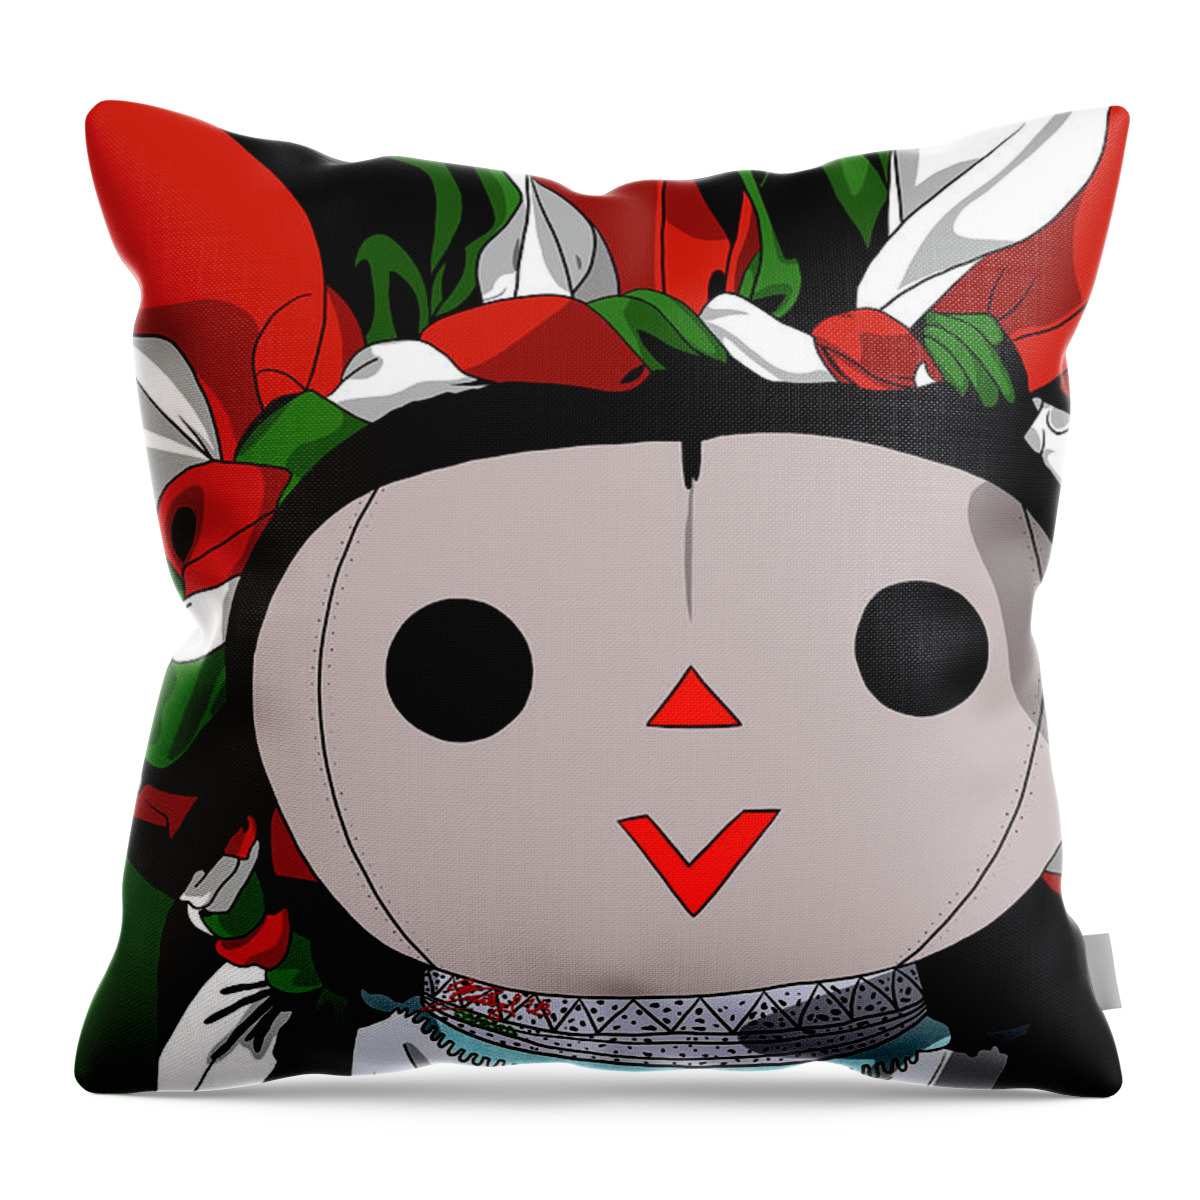 Mazahua Throw Pillow featuring the digital art Maria Doll green white red by Marisol VB